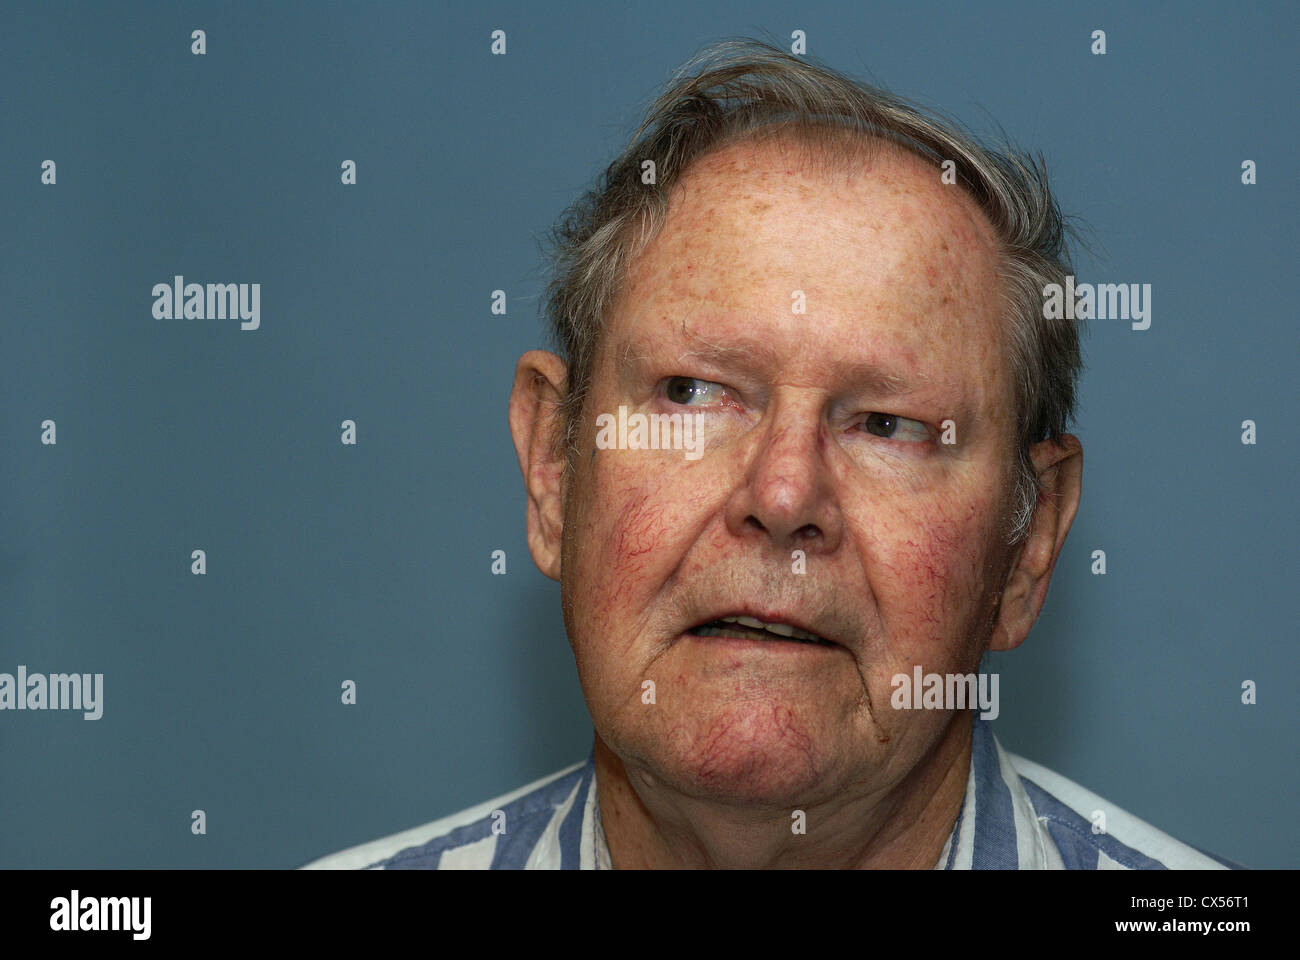 Face of elderly man. Stock Photo